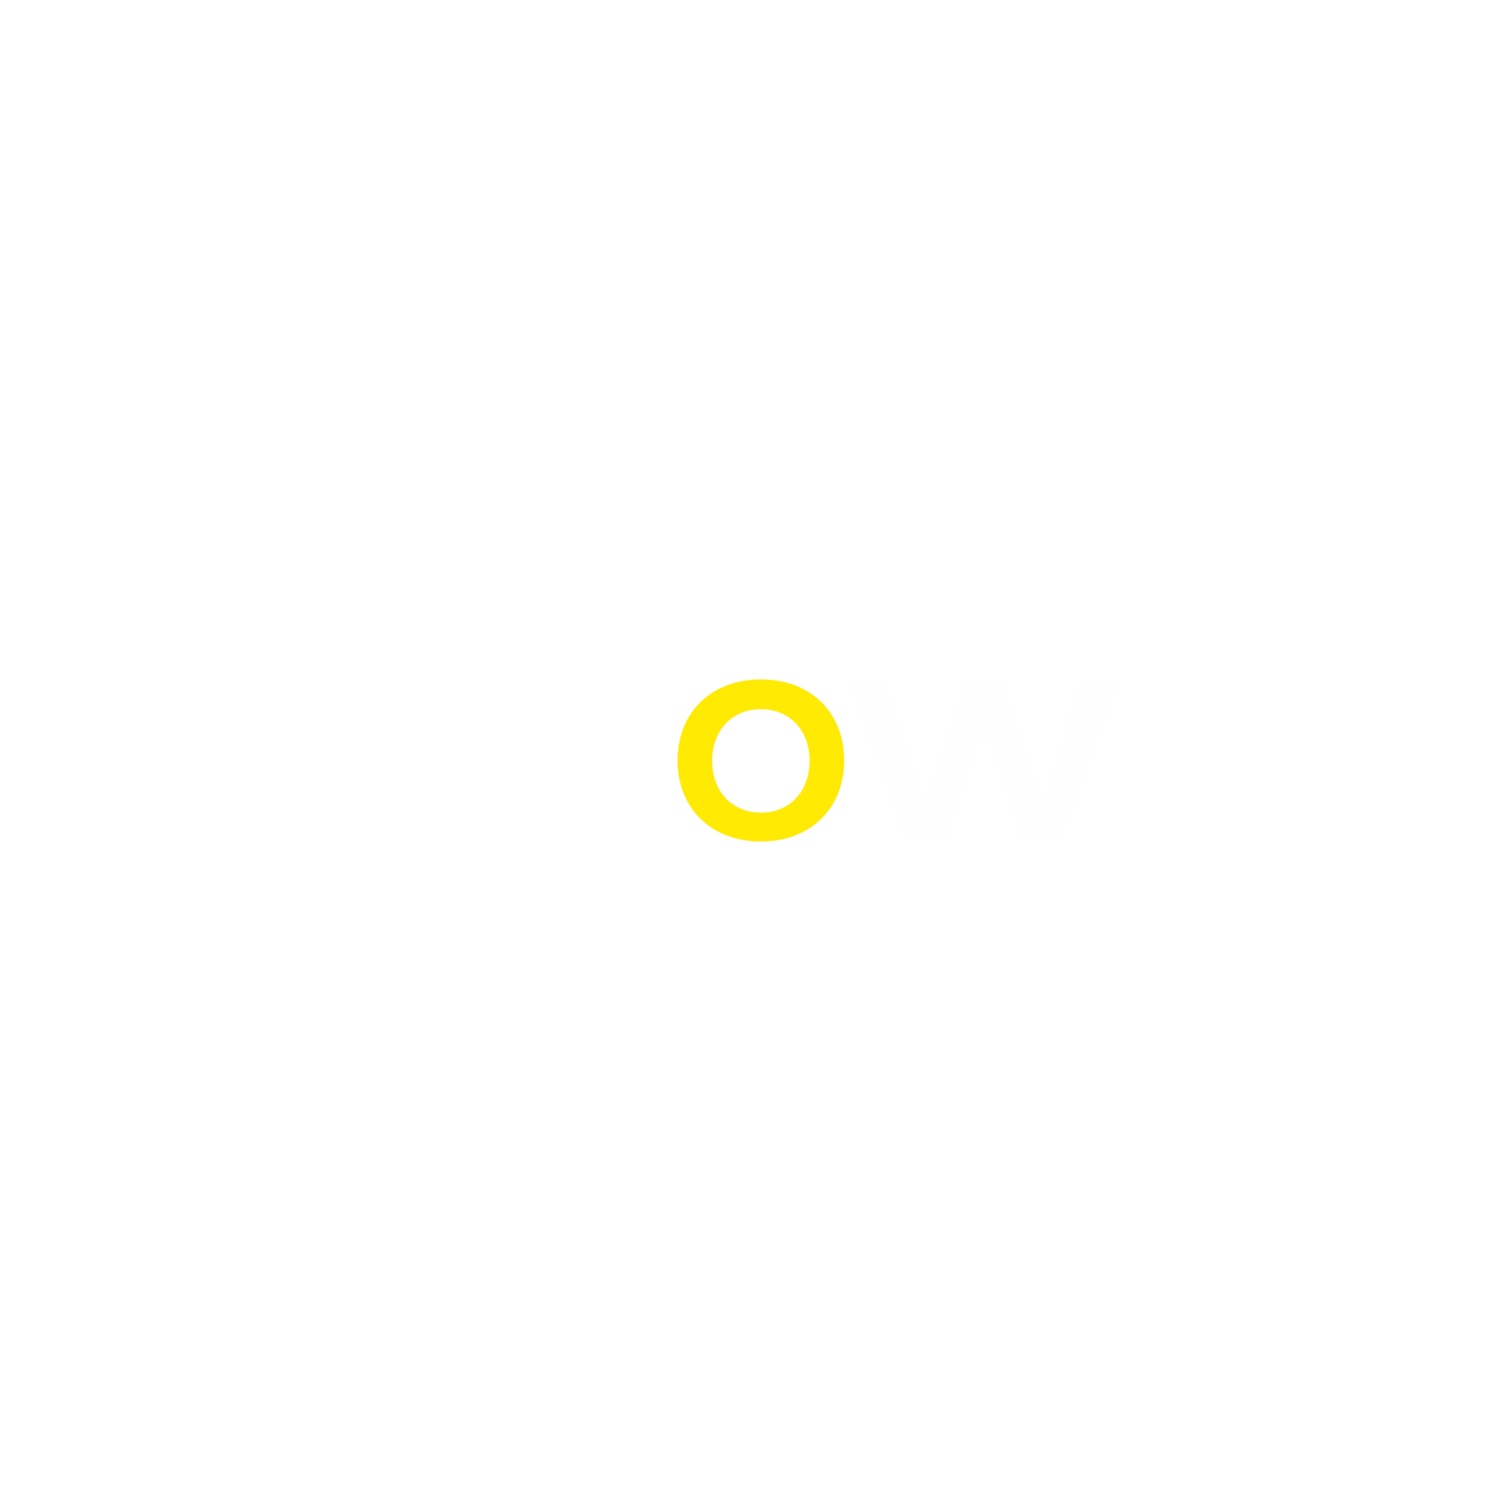 Glow Health Co